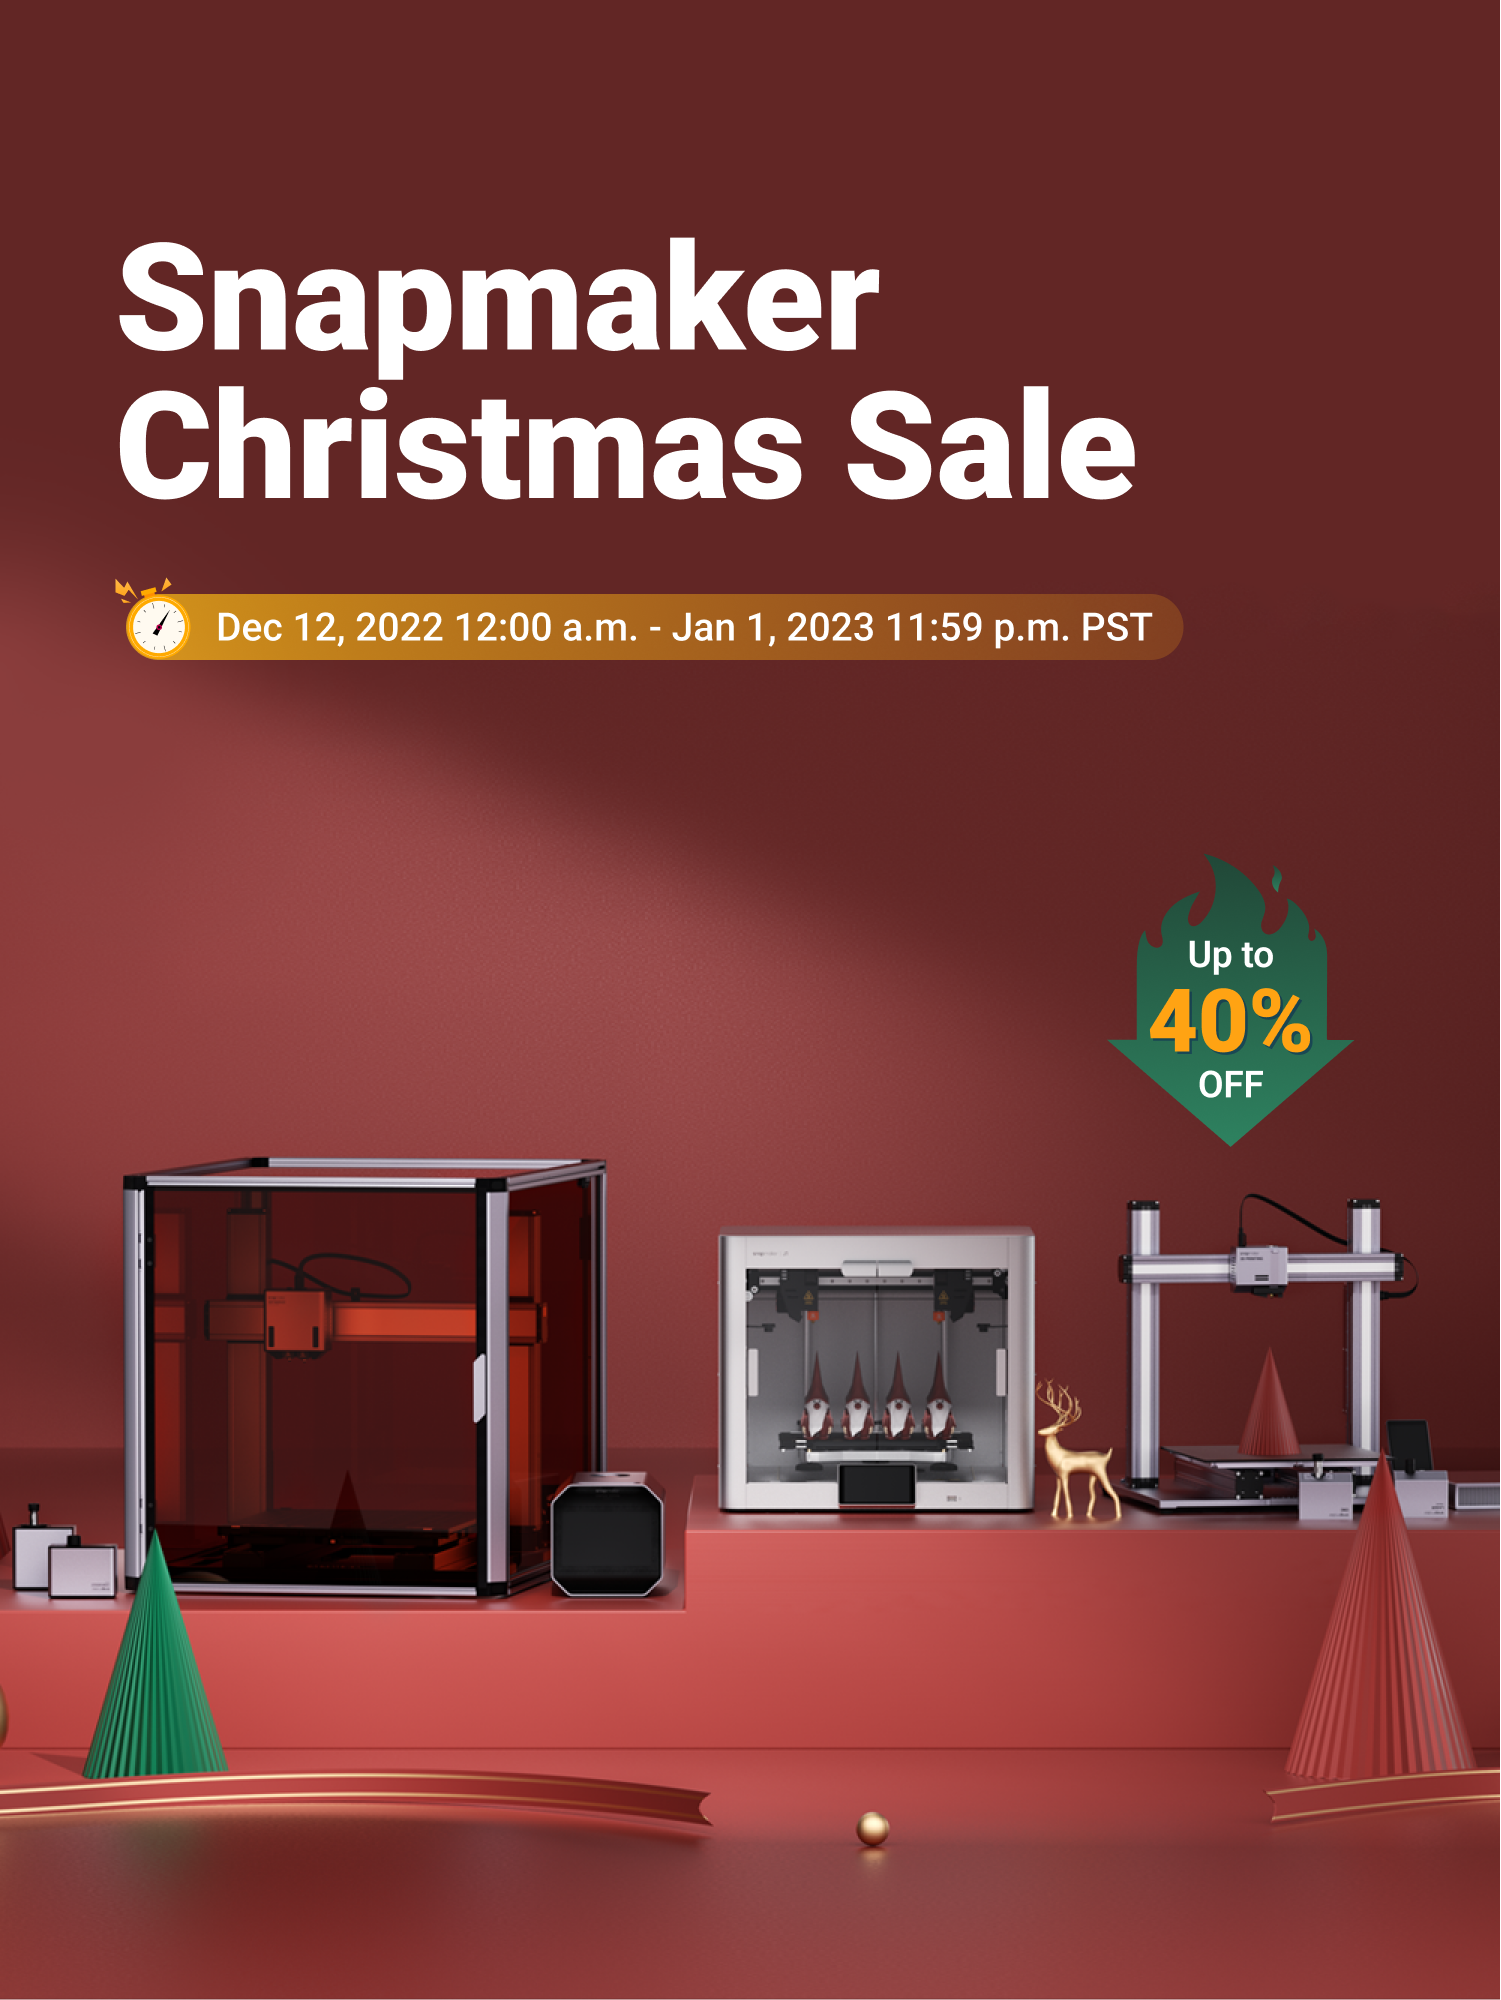 Snapmaker Christmas Sale Online - Snapmaker